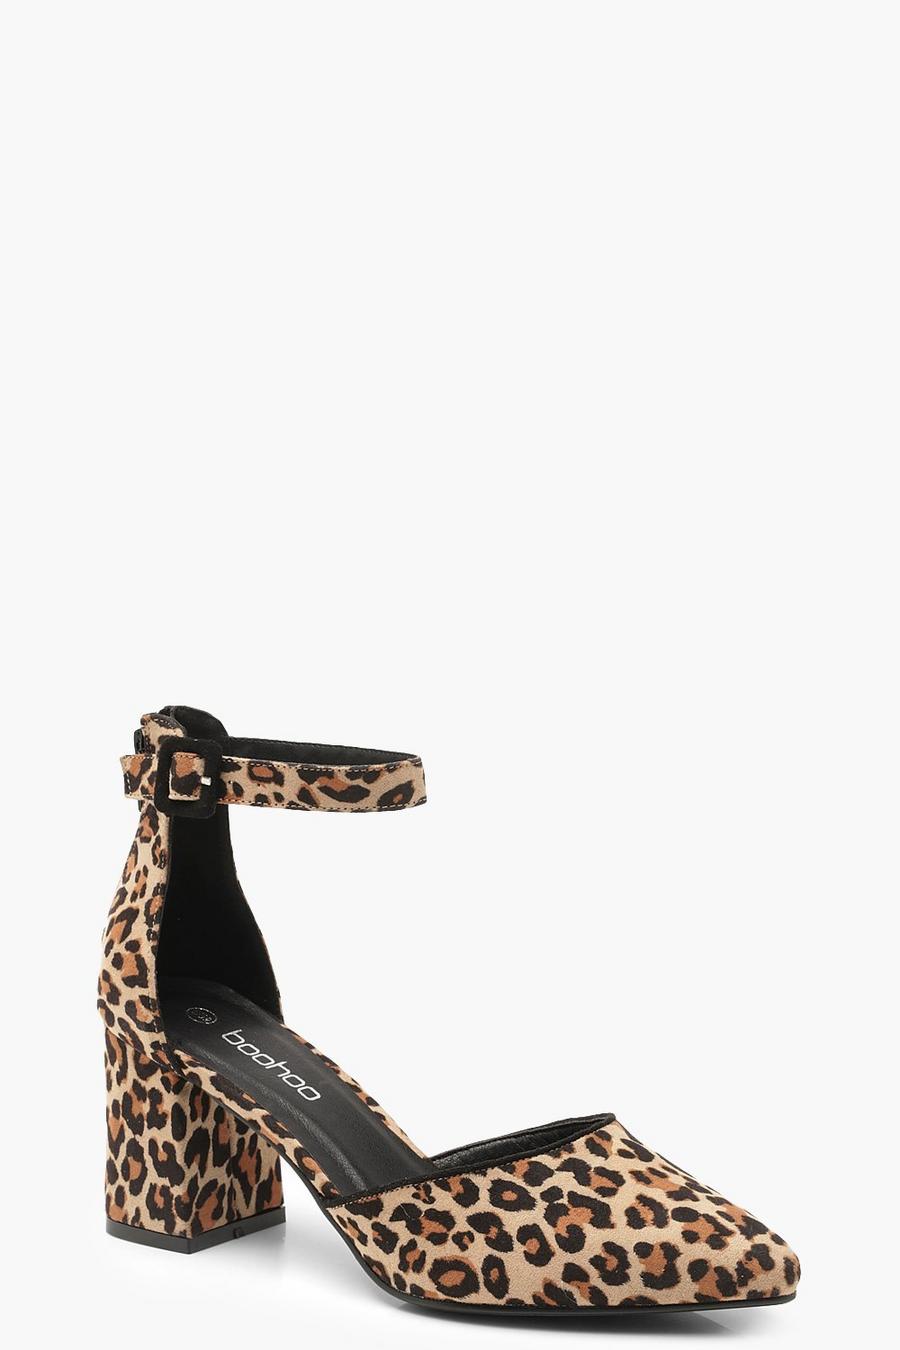 Leopard Print Pointed Low Block Heel Ballets